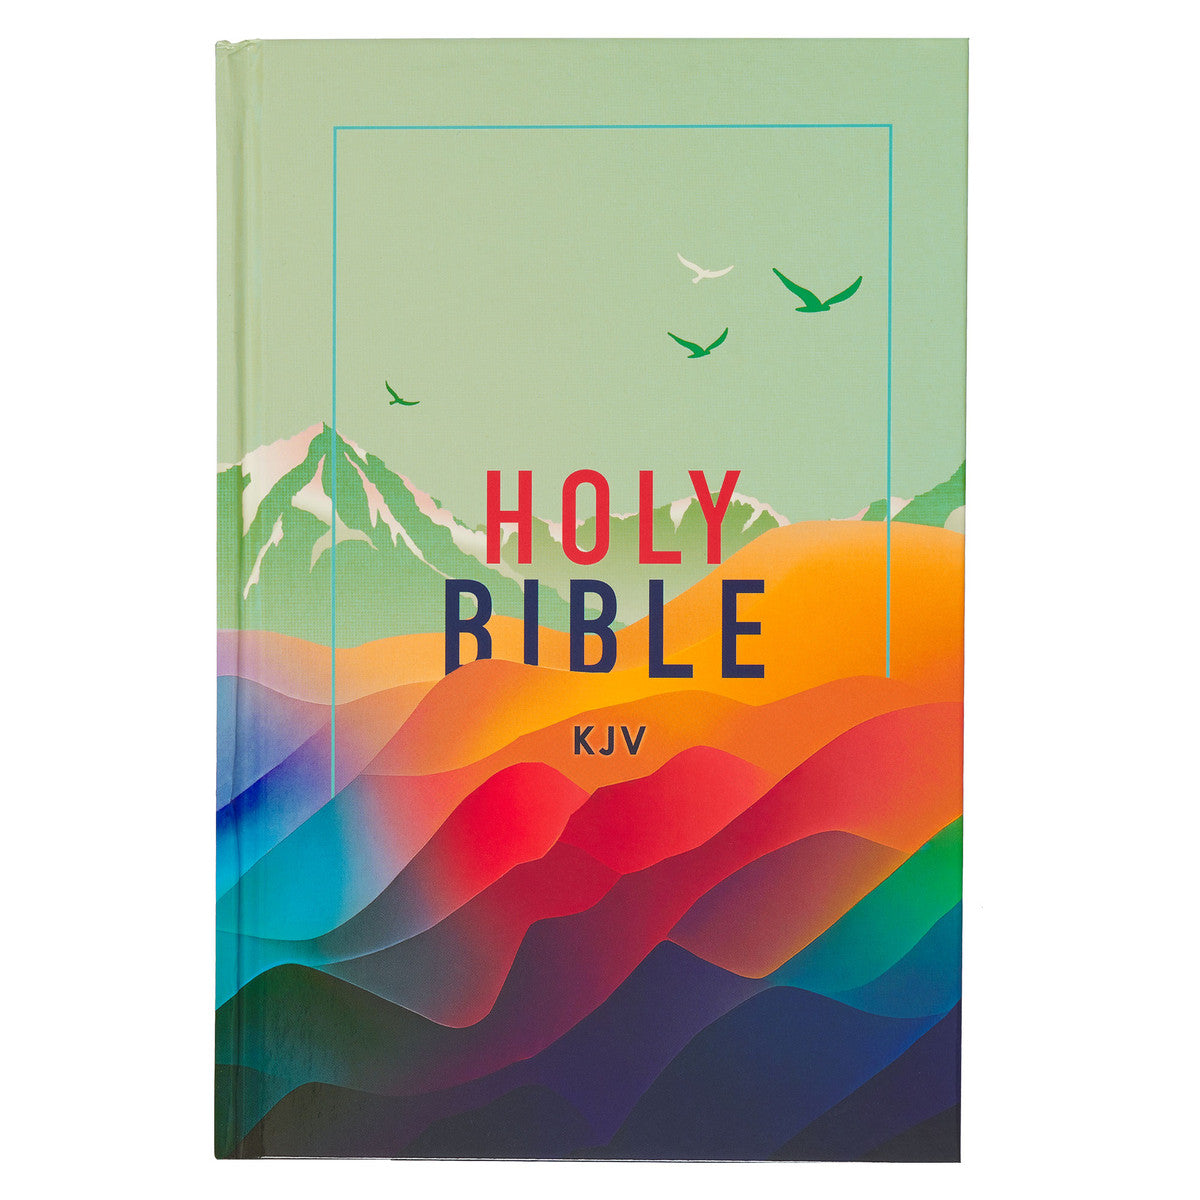 Colorful Hardcover Kid's King James Version Bible